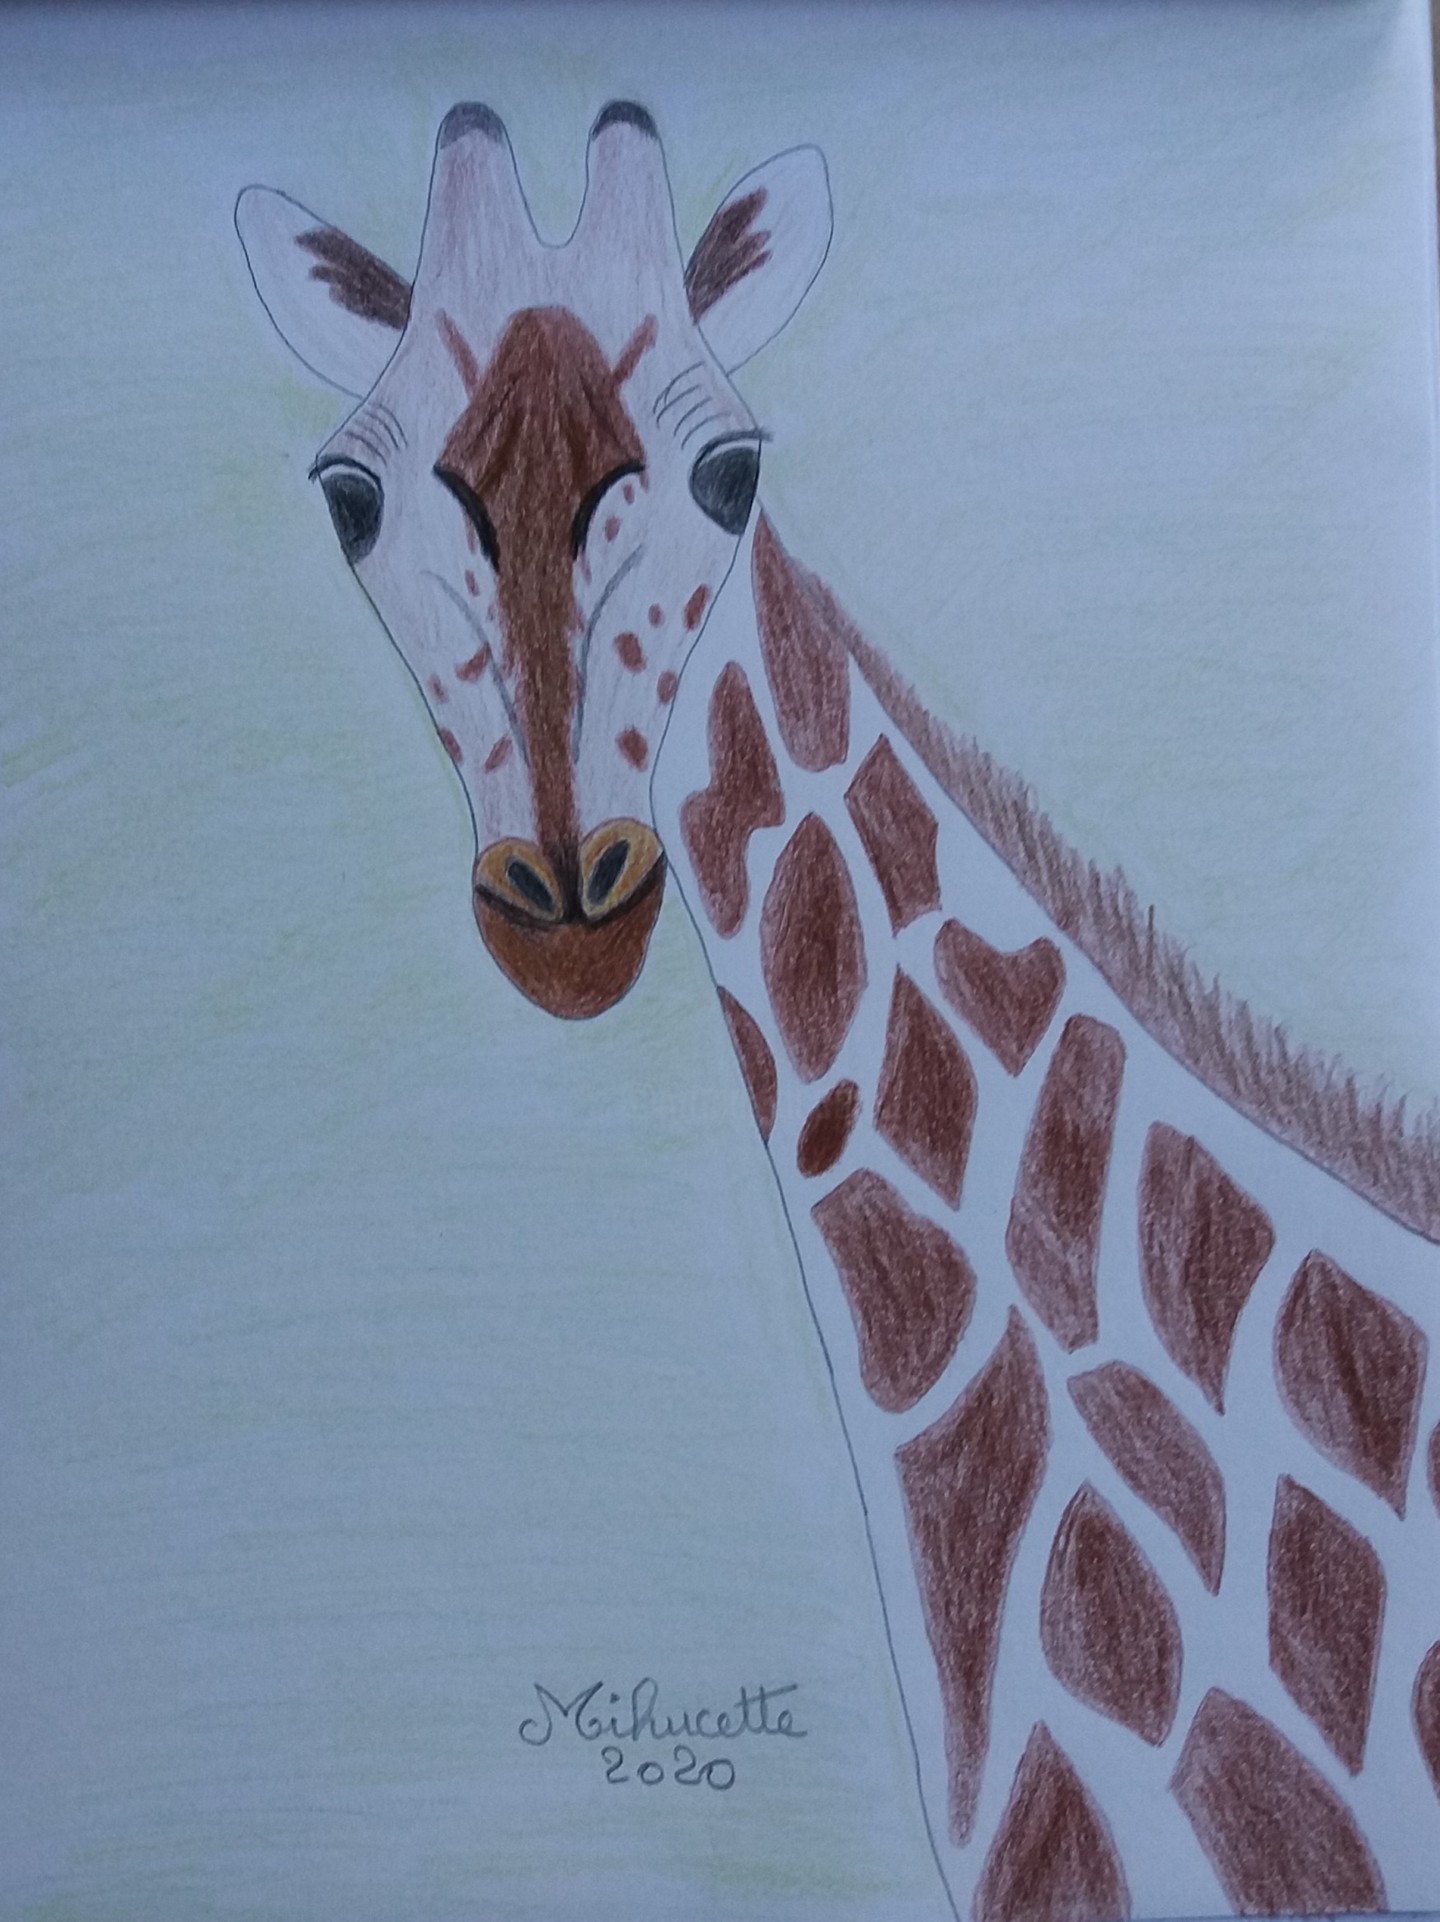 girafe dessin